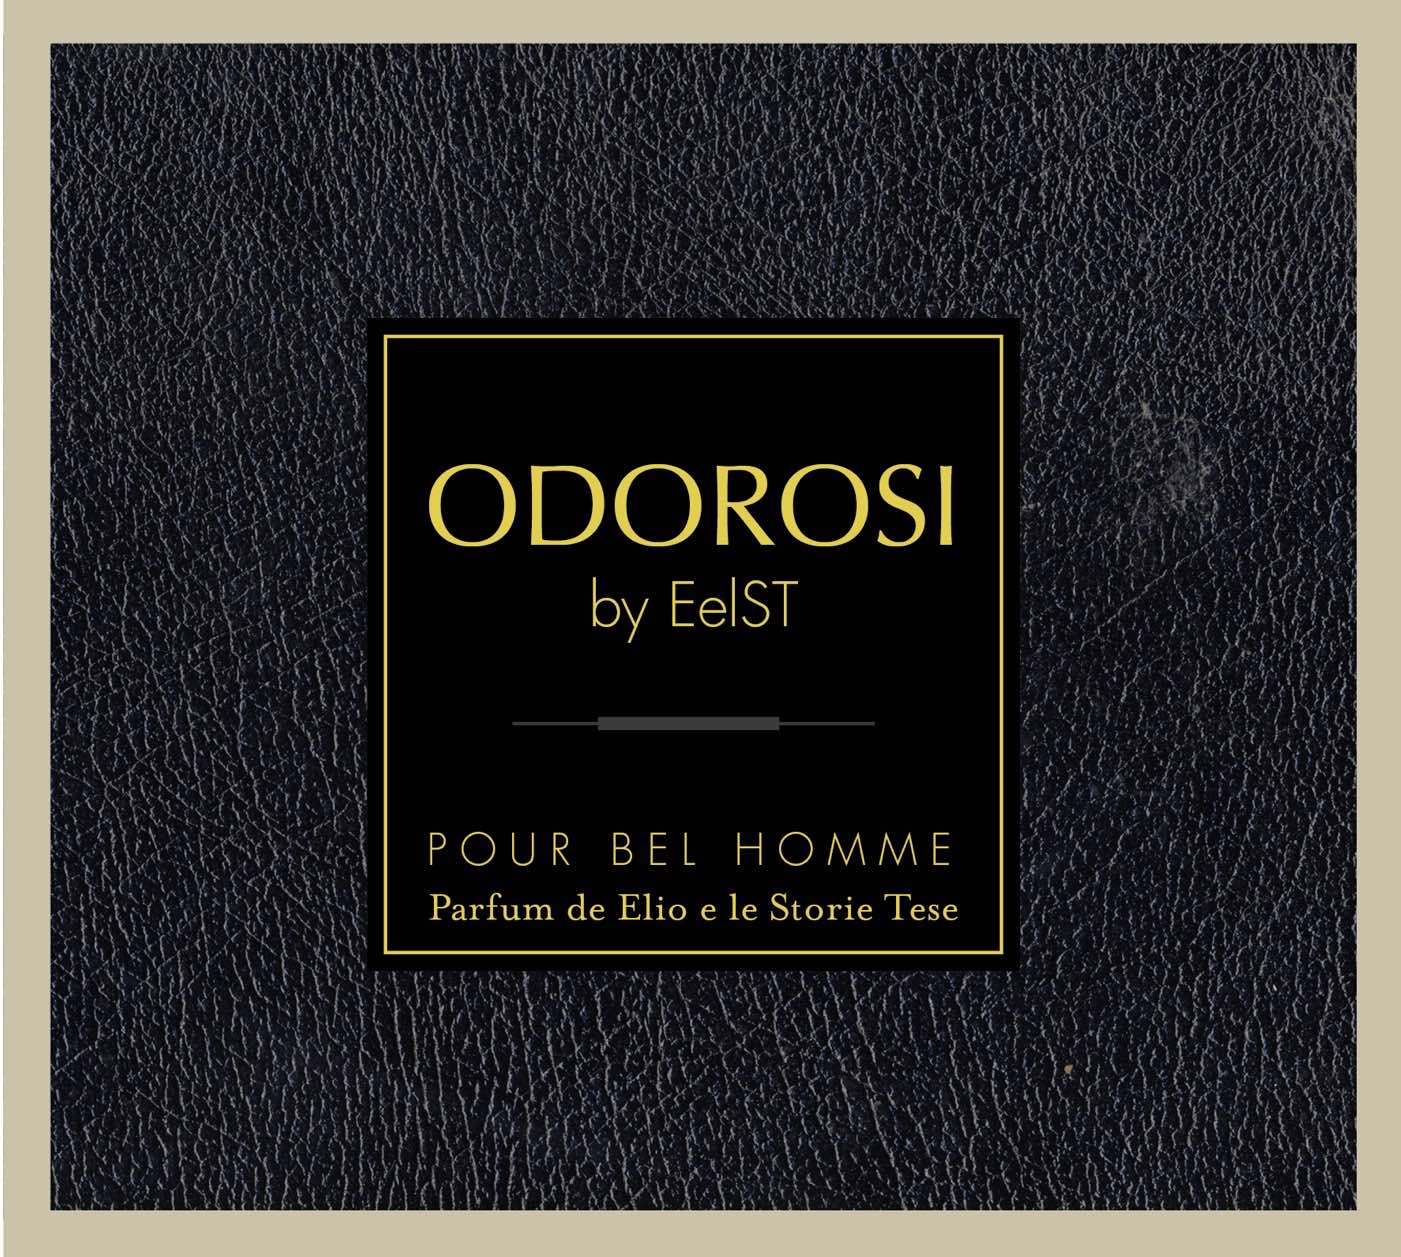 ODOROSI by Elio e le Storie Tese, due compact disc in una speciale confezione Pour bel Homme e Pour bel Femme